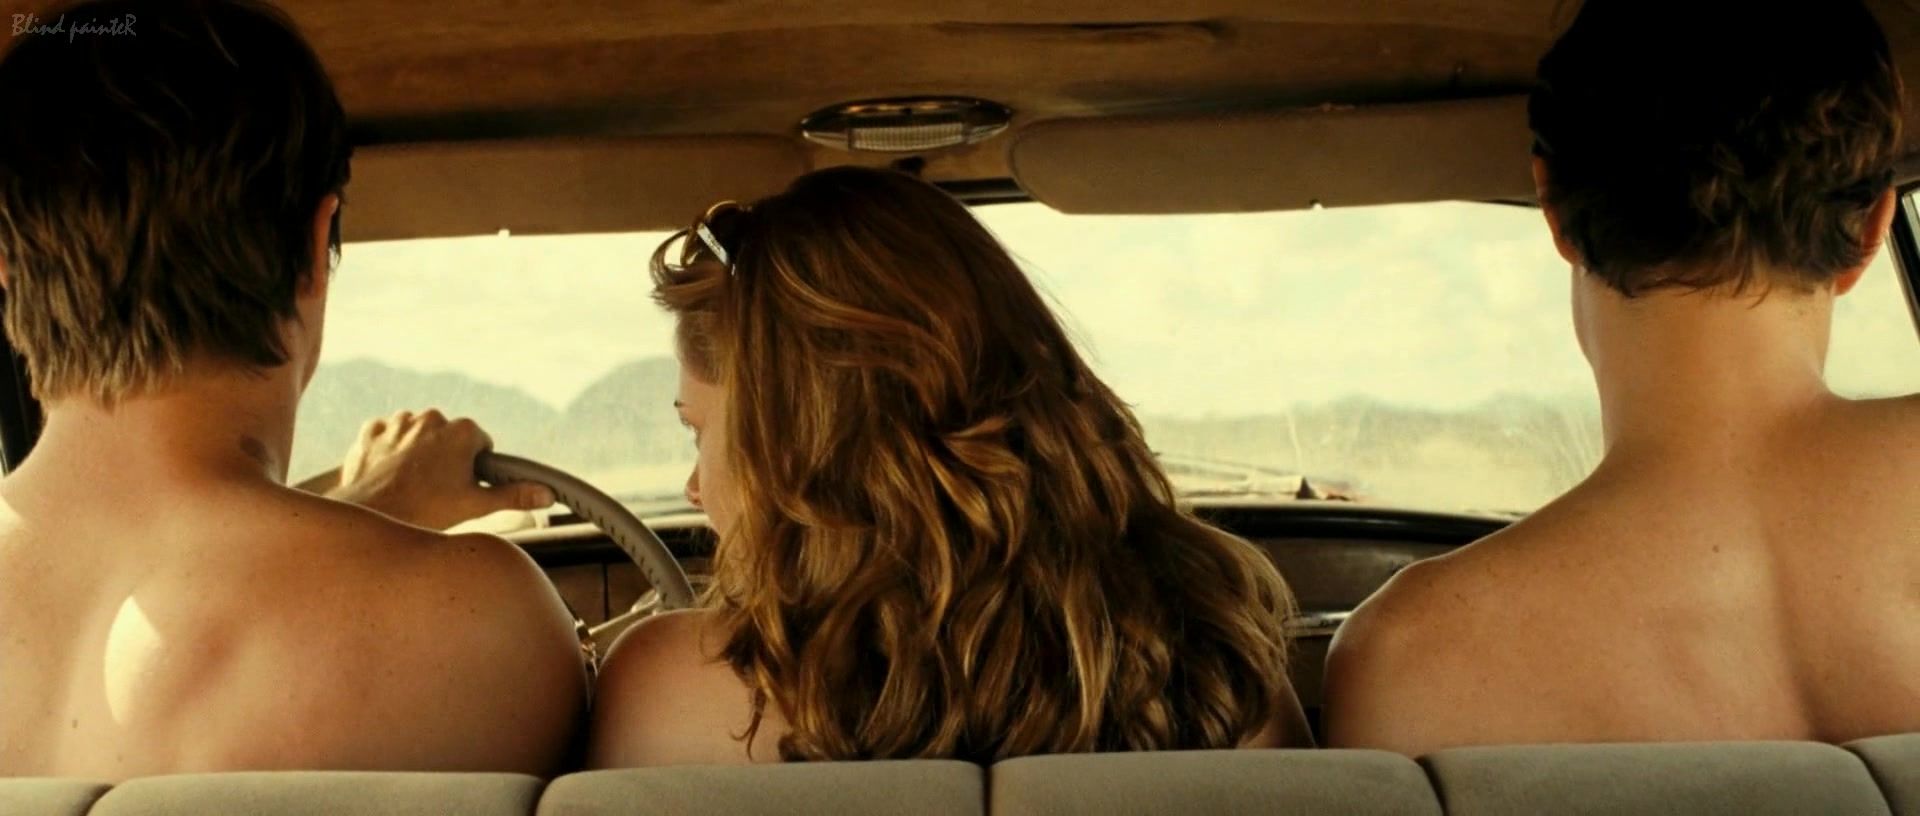 veyqo Kristen Stewart nude - On The Road S1E1 Safado